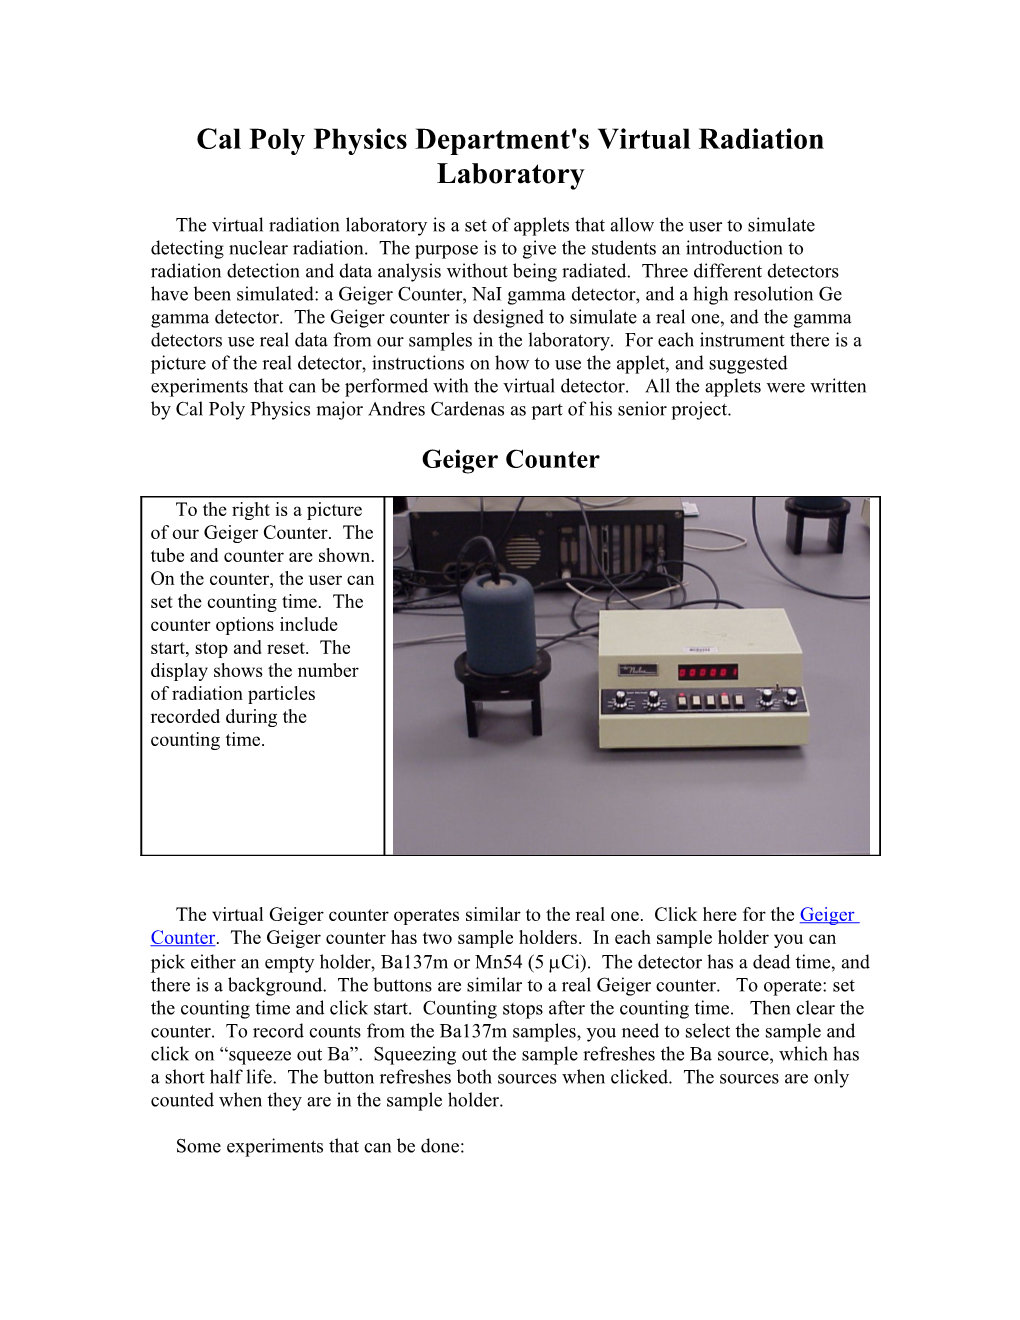 Cal Poly Physics Department's Virtual Radiation Laboratory